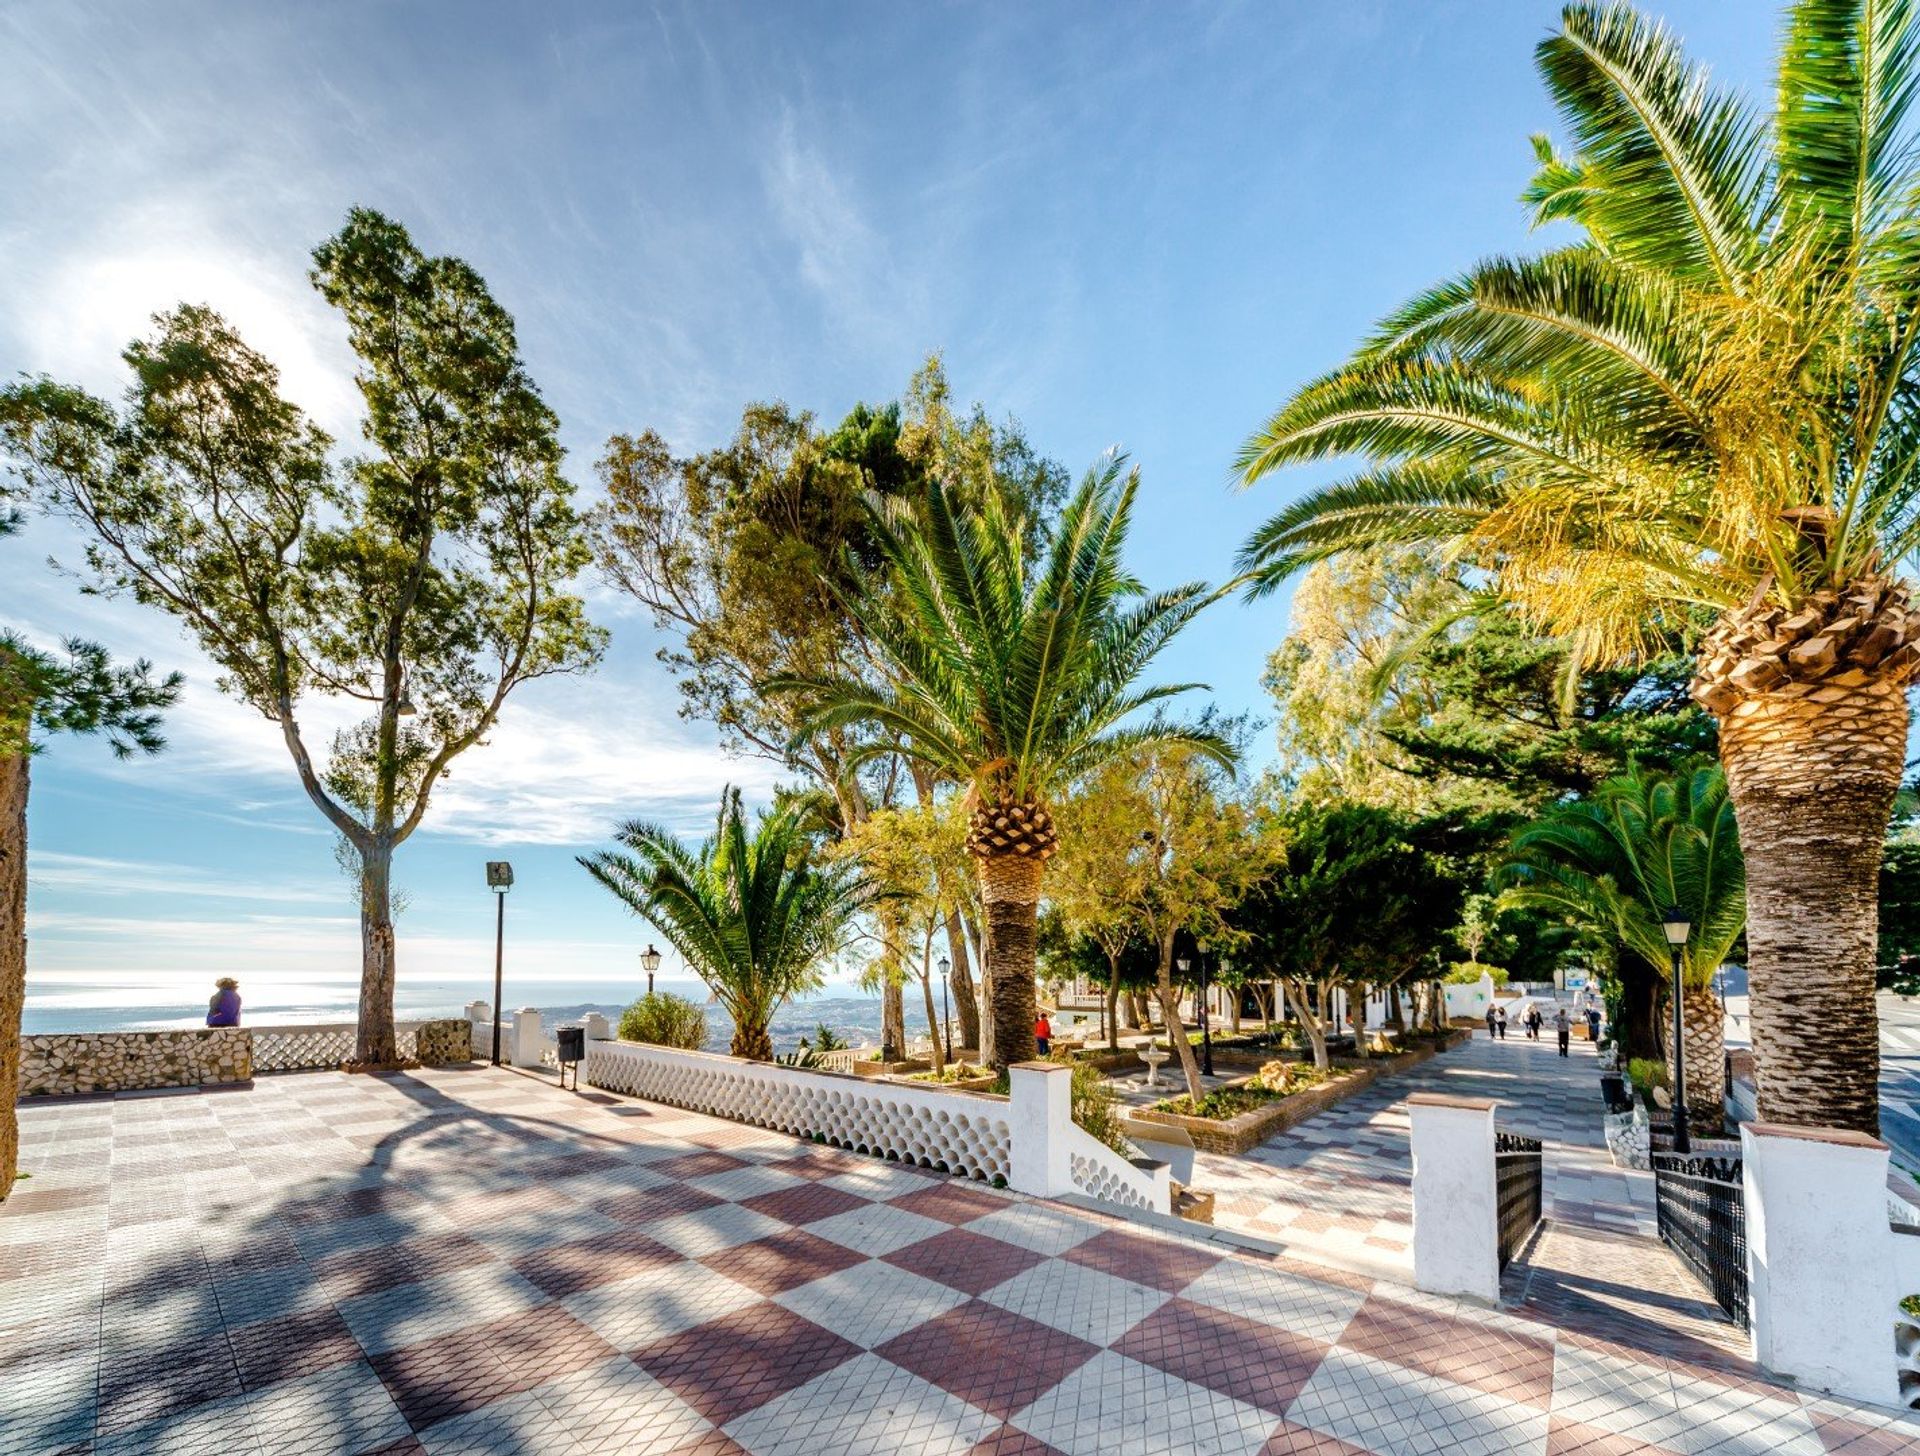 Enjoy a relaxing stroll with family down La Cala de Mijas' beautiful promenade, with its coastal path stretching to Calahonda